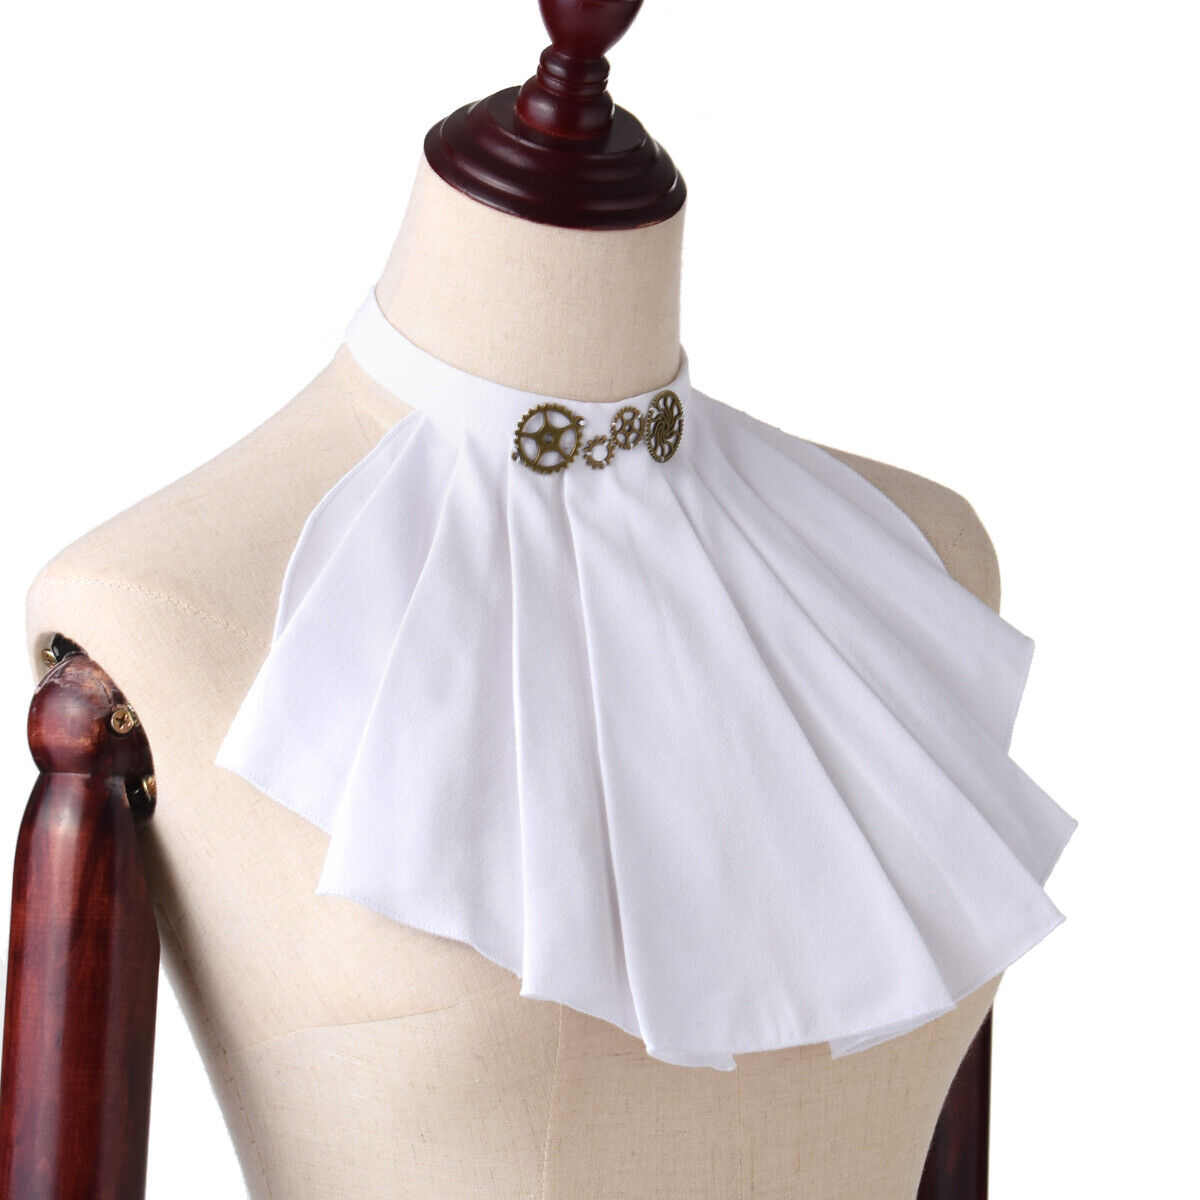 Women Victorian Jabot Neck gear Deco Ruffle Collar for costume 2 Colors